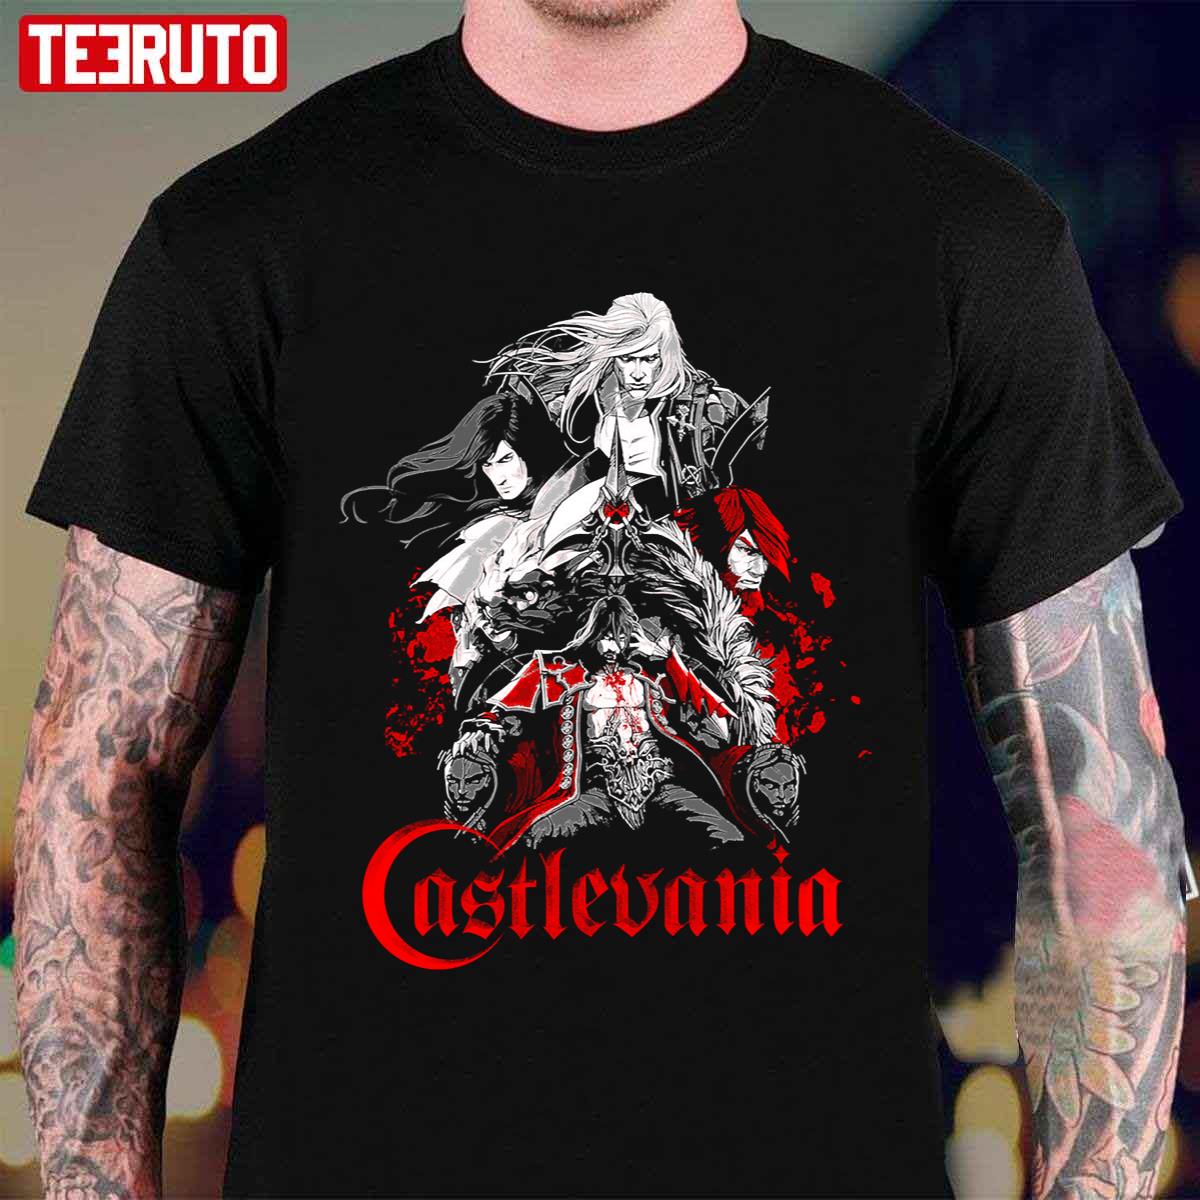 All Hero On Castlevania Unisex Sweatshirt